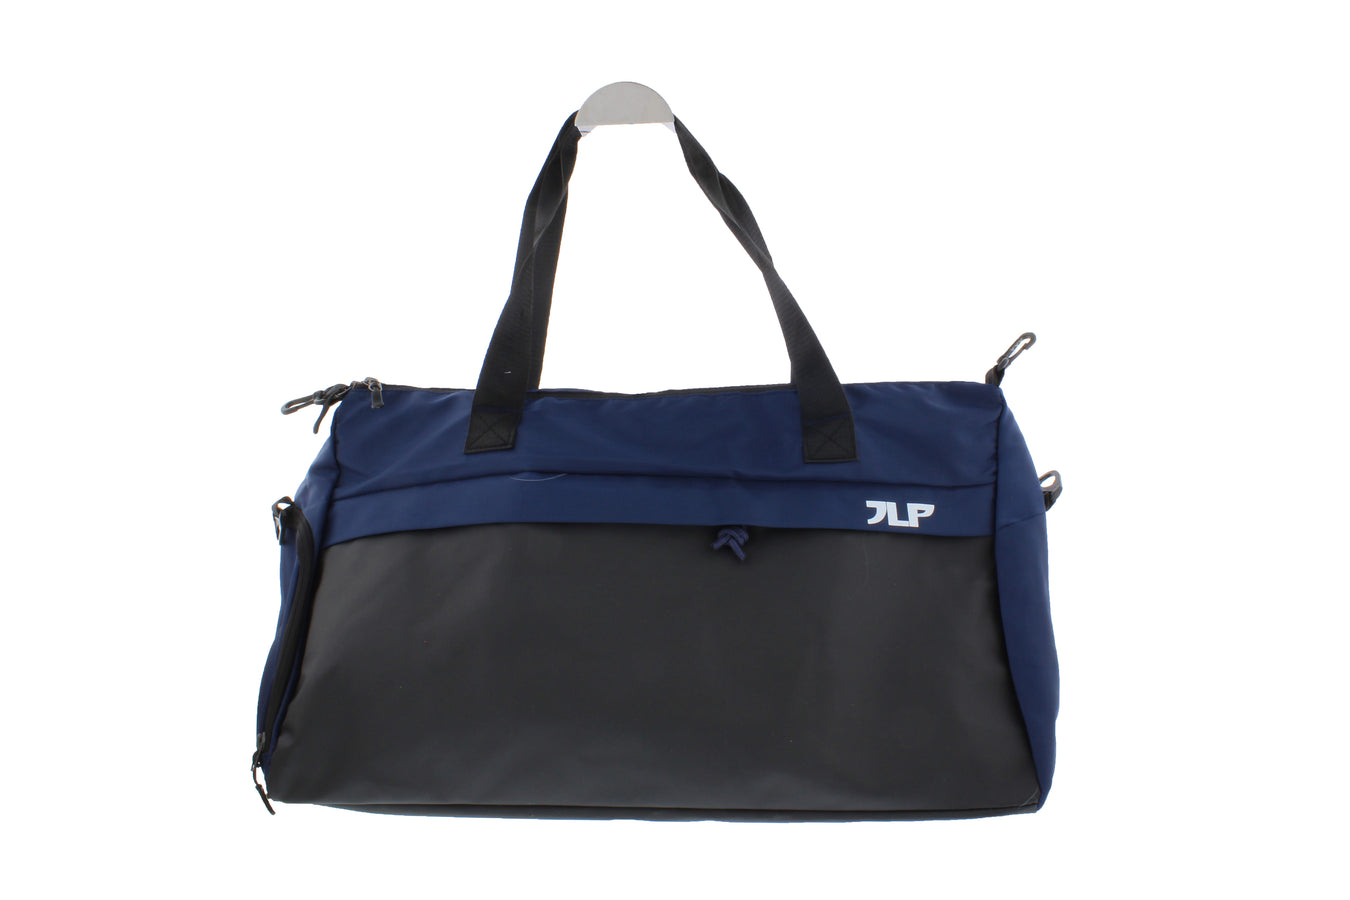 Accessories - Bags - Duffel Bags